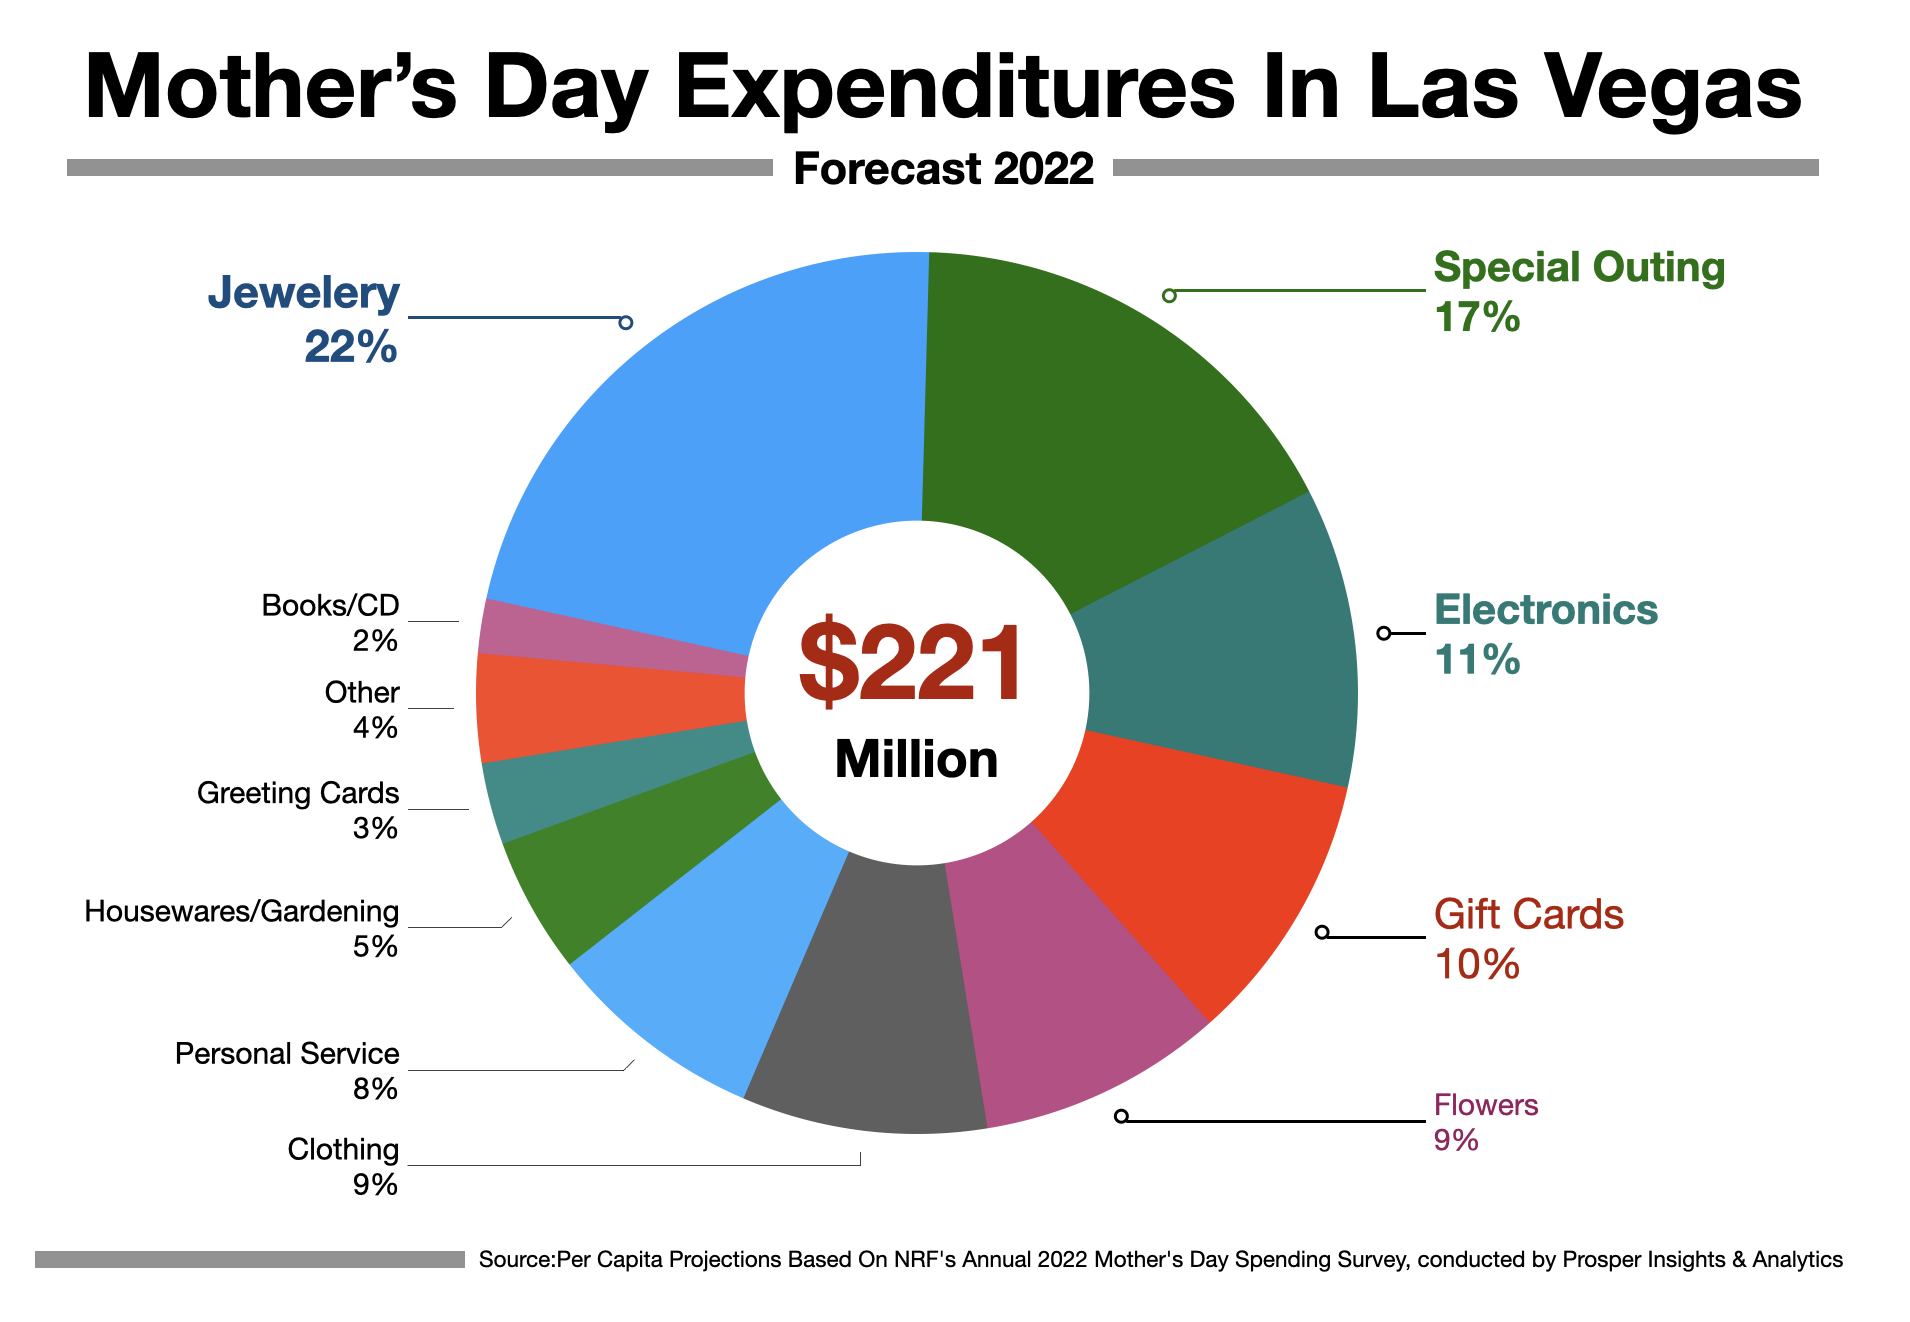 Mother's Day Advertising in Las Vegas: 2022